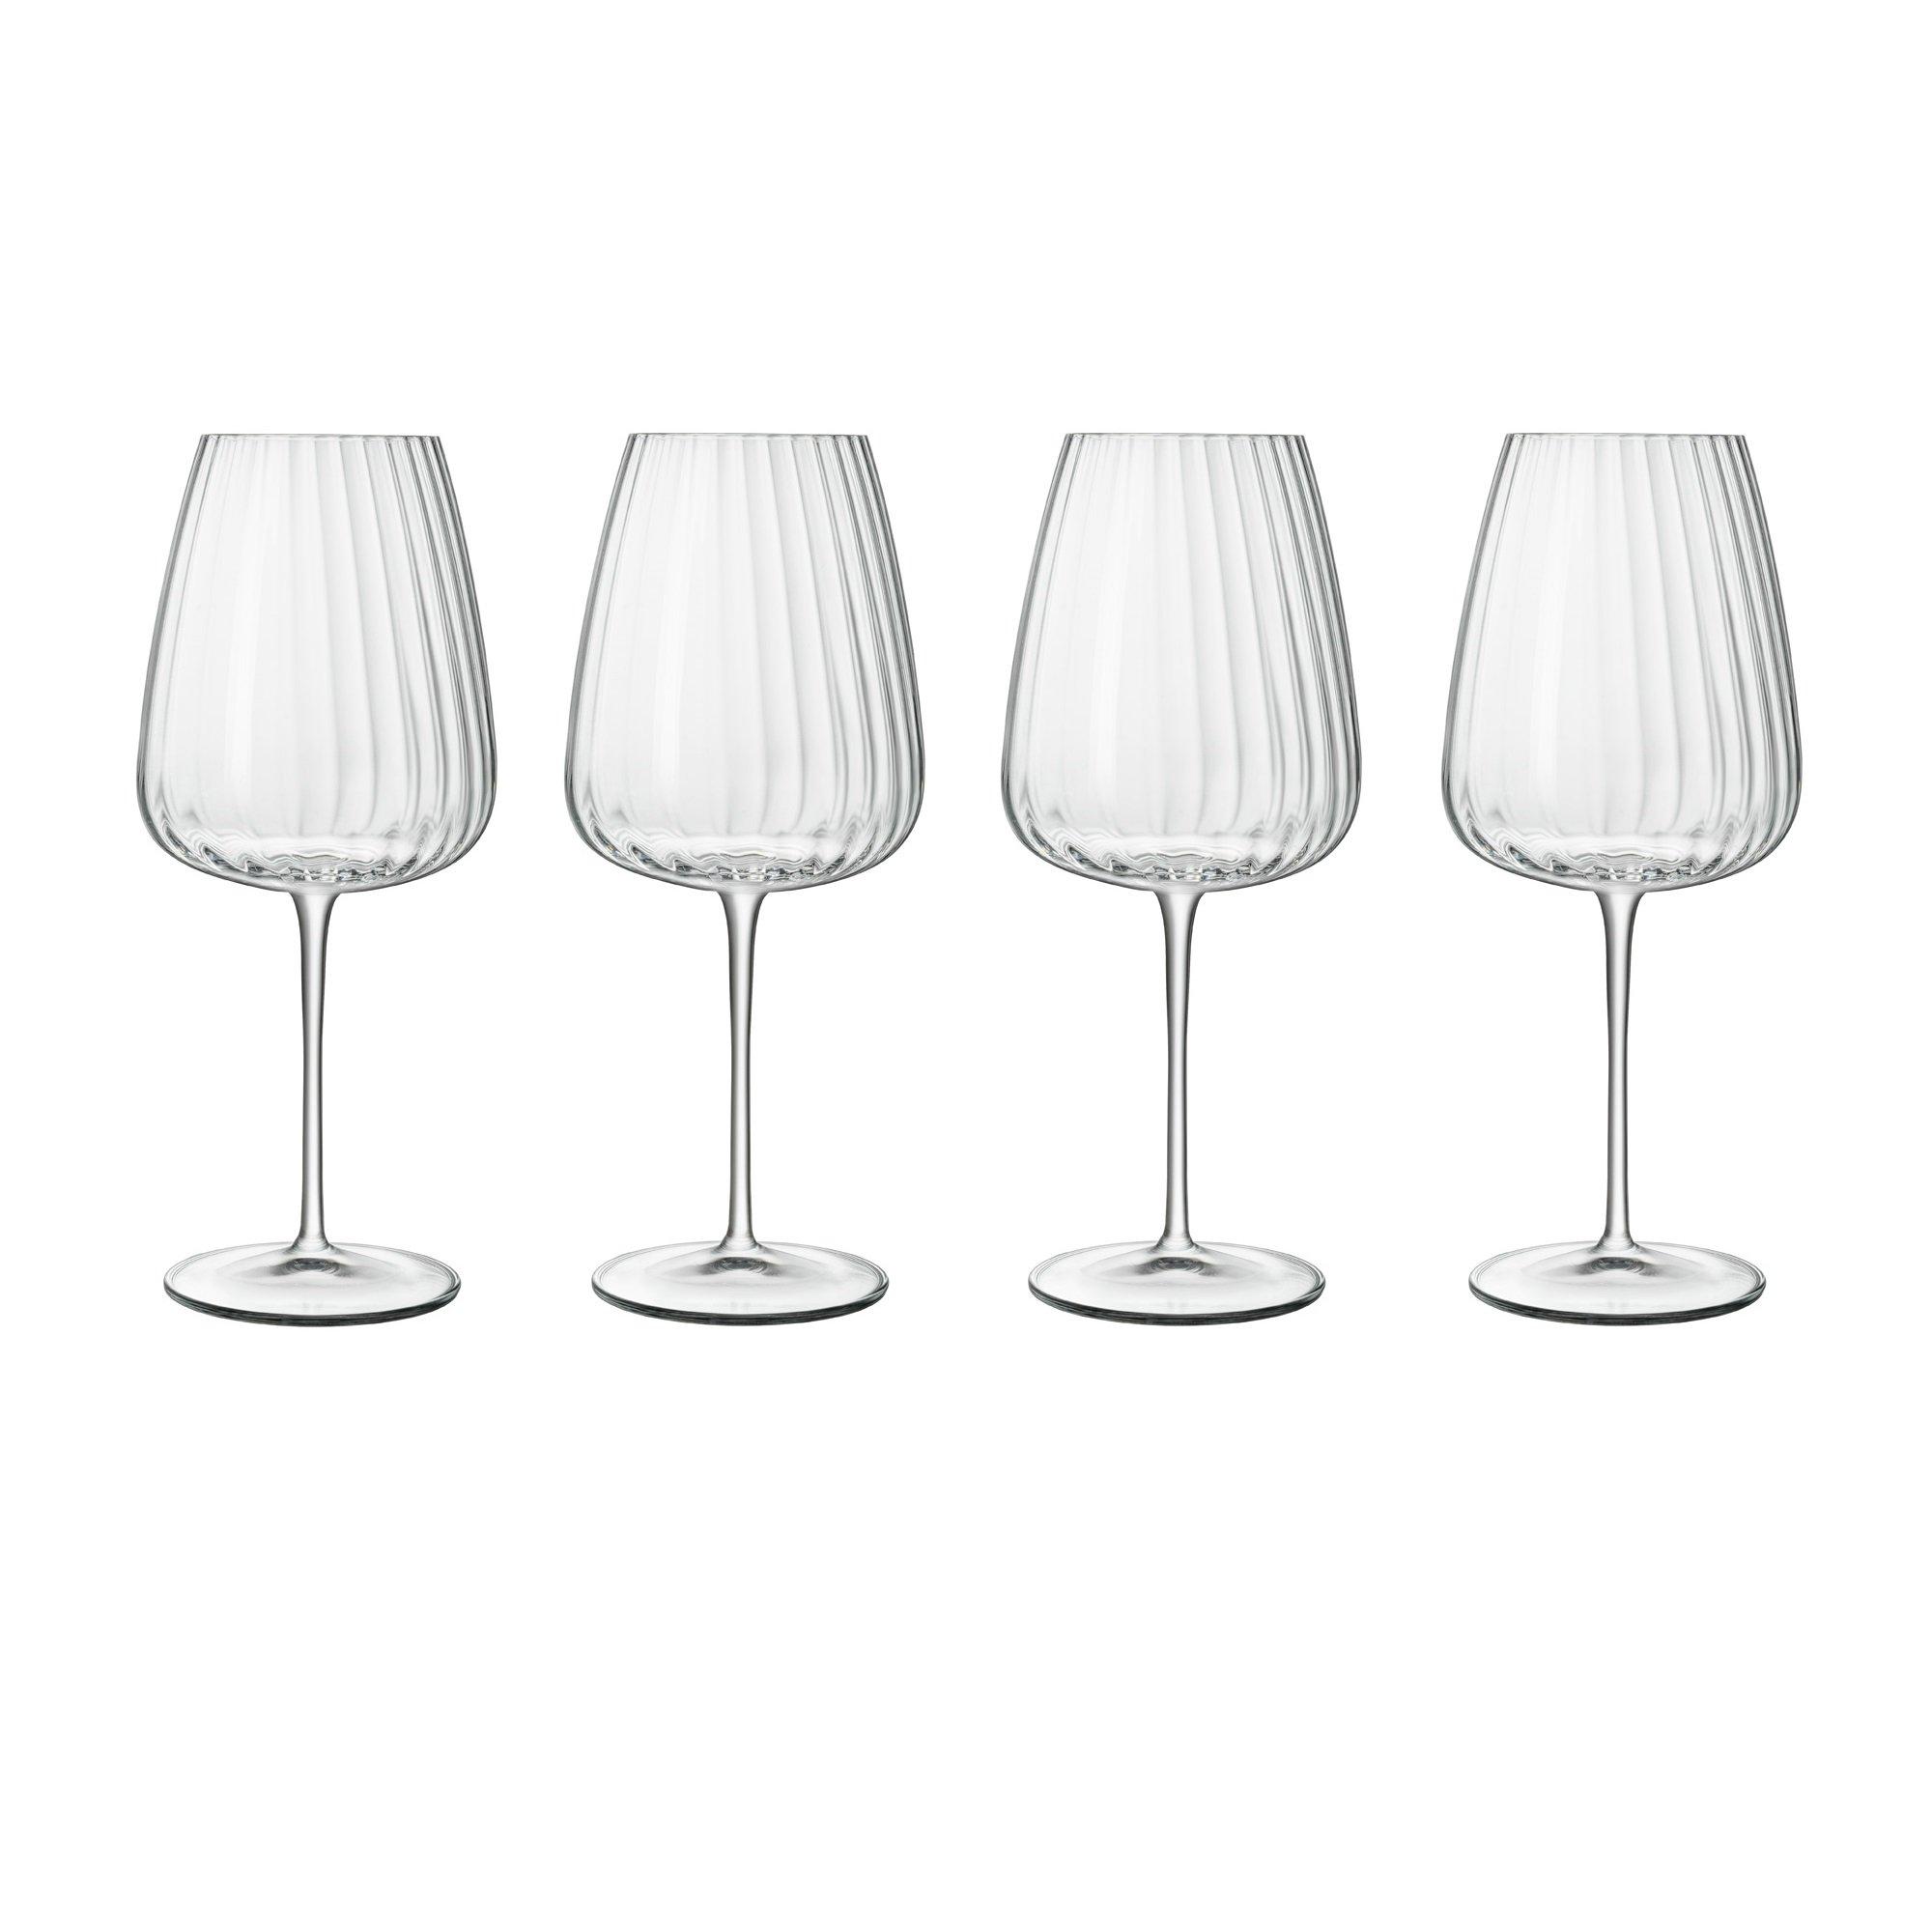 Optica Bordeaux Glasses - Dishwasher Safe, 700 ml - Pack of 4